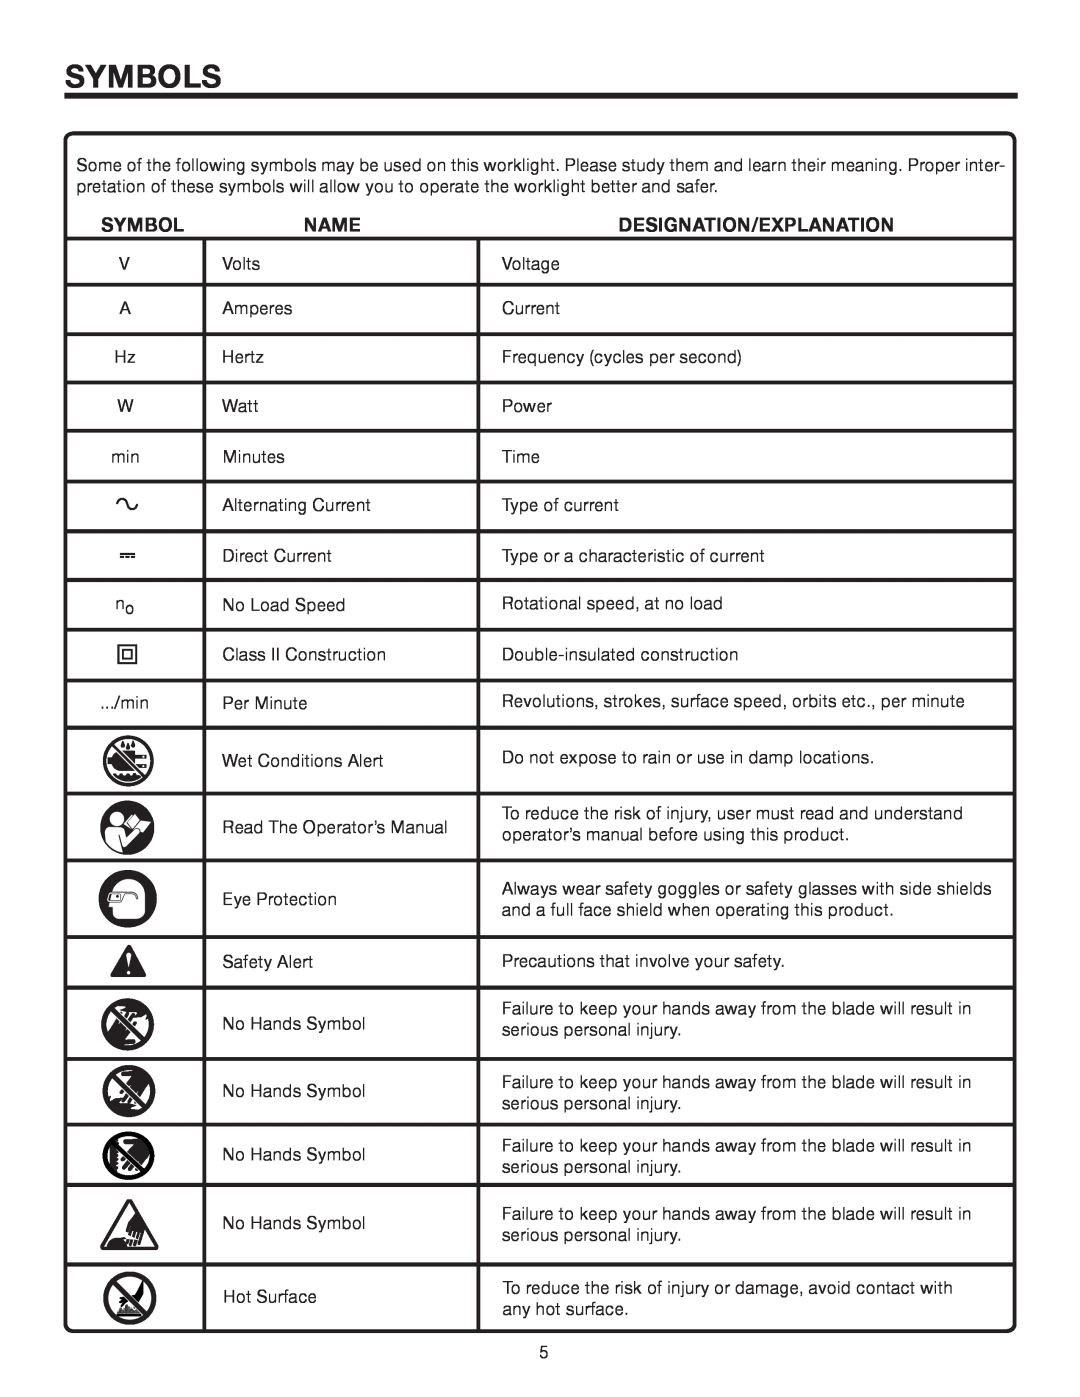 RIDGID R849 manual Symbols, Name, Designation/Explanation 